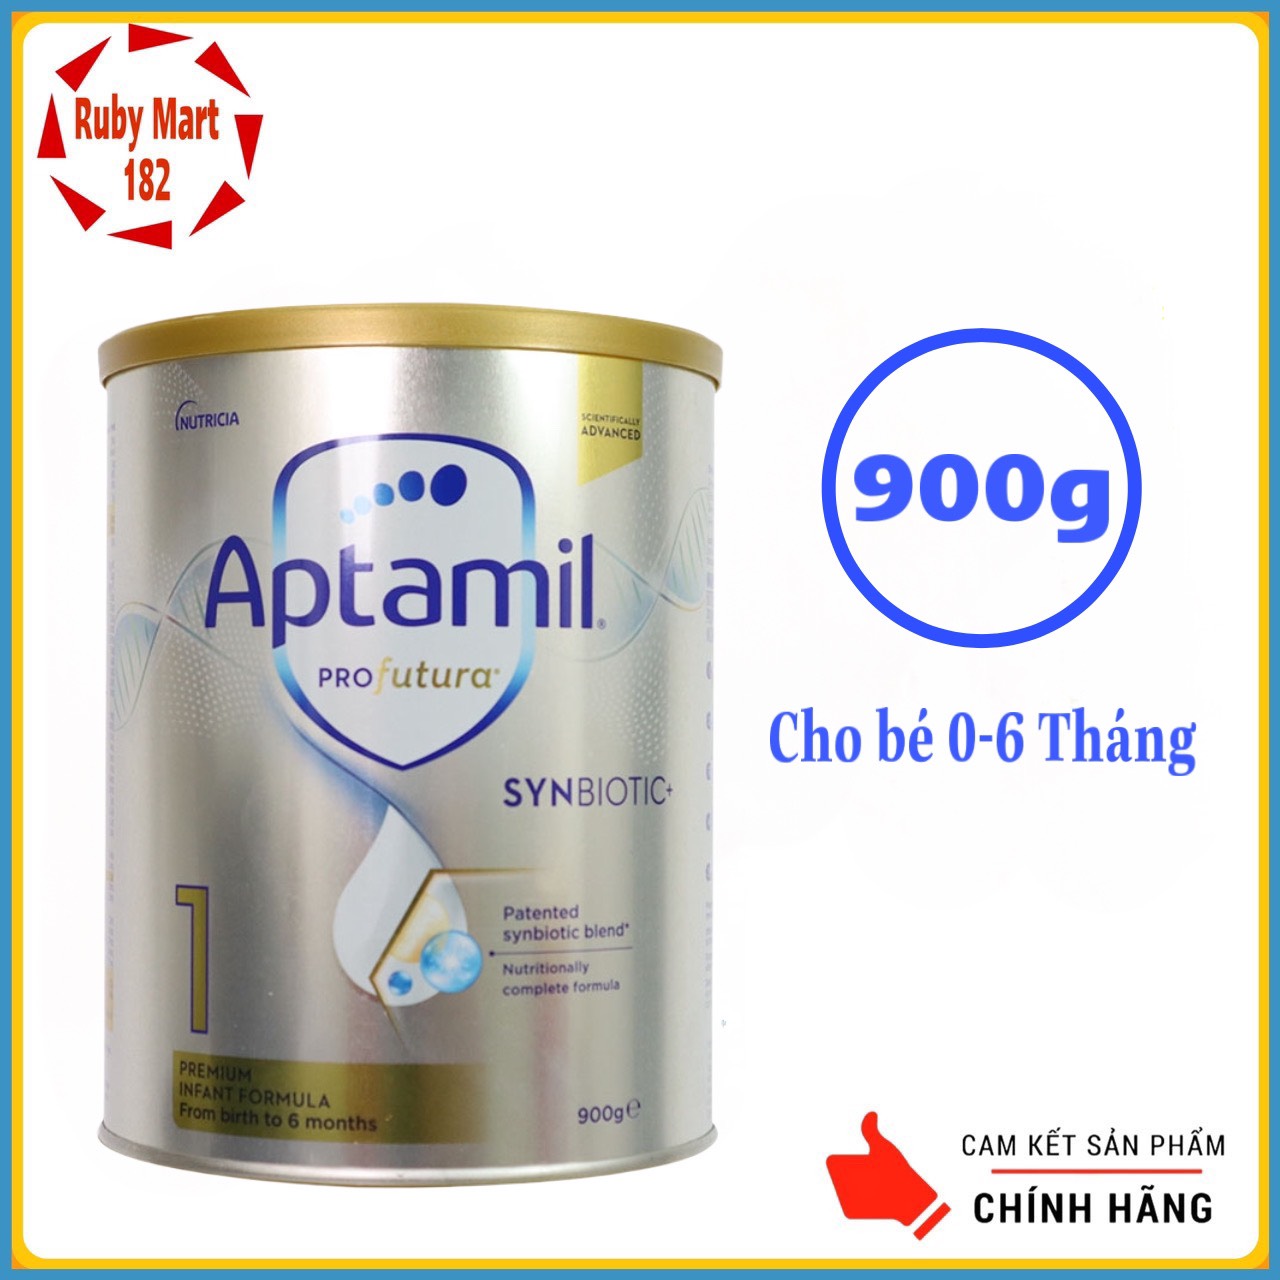 FREESHIP Sữa Aptamil Úc đủ số 1 2 3 Lon 900g